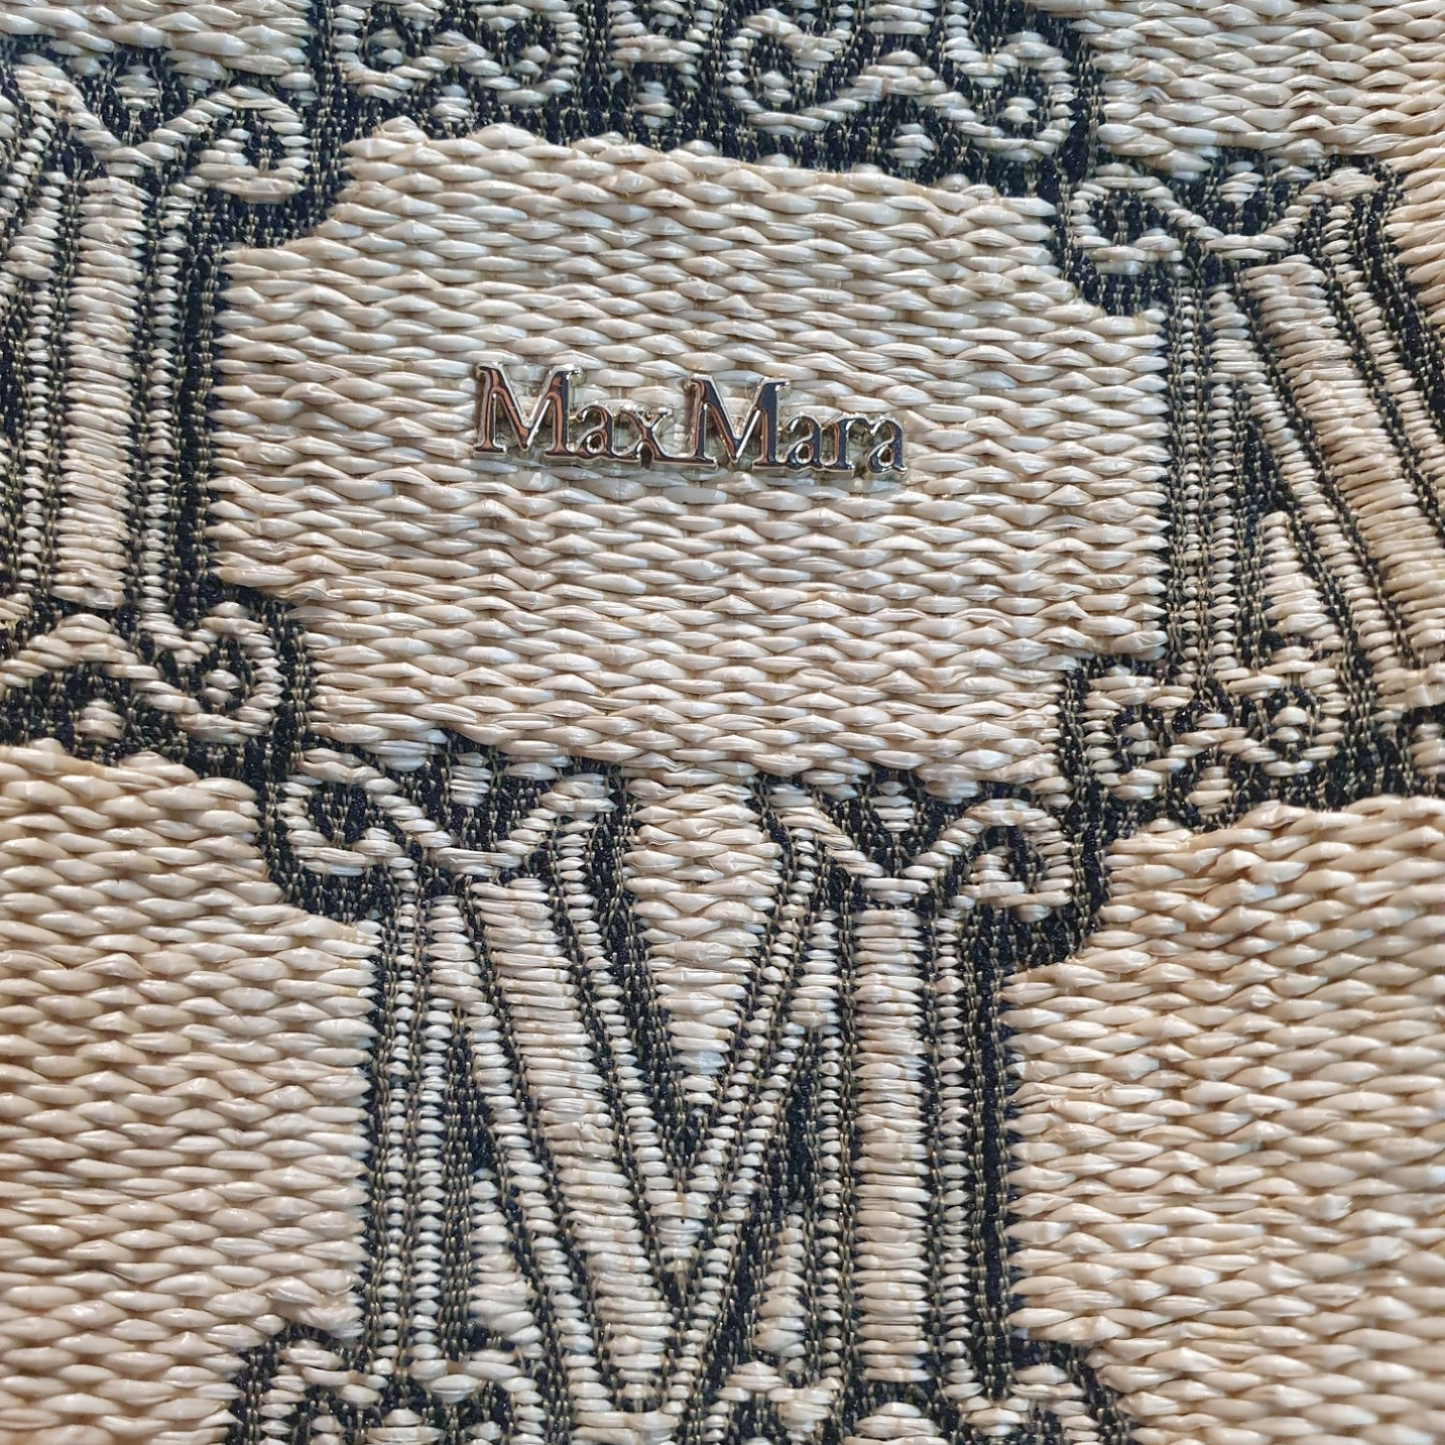 Max Mara Raffia Canvas Monogram Tote bag, with black leather details